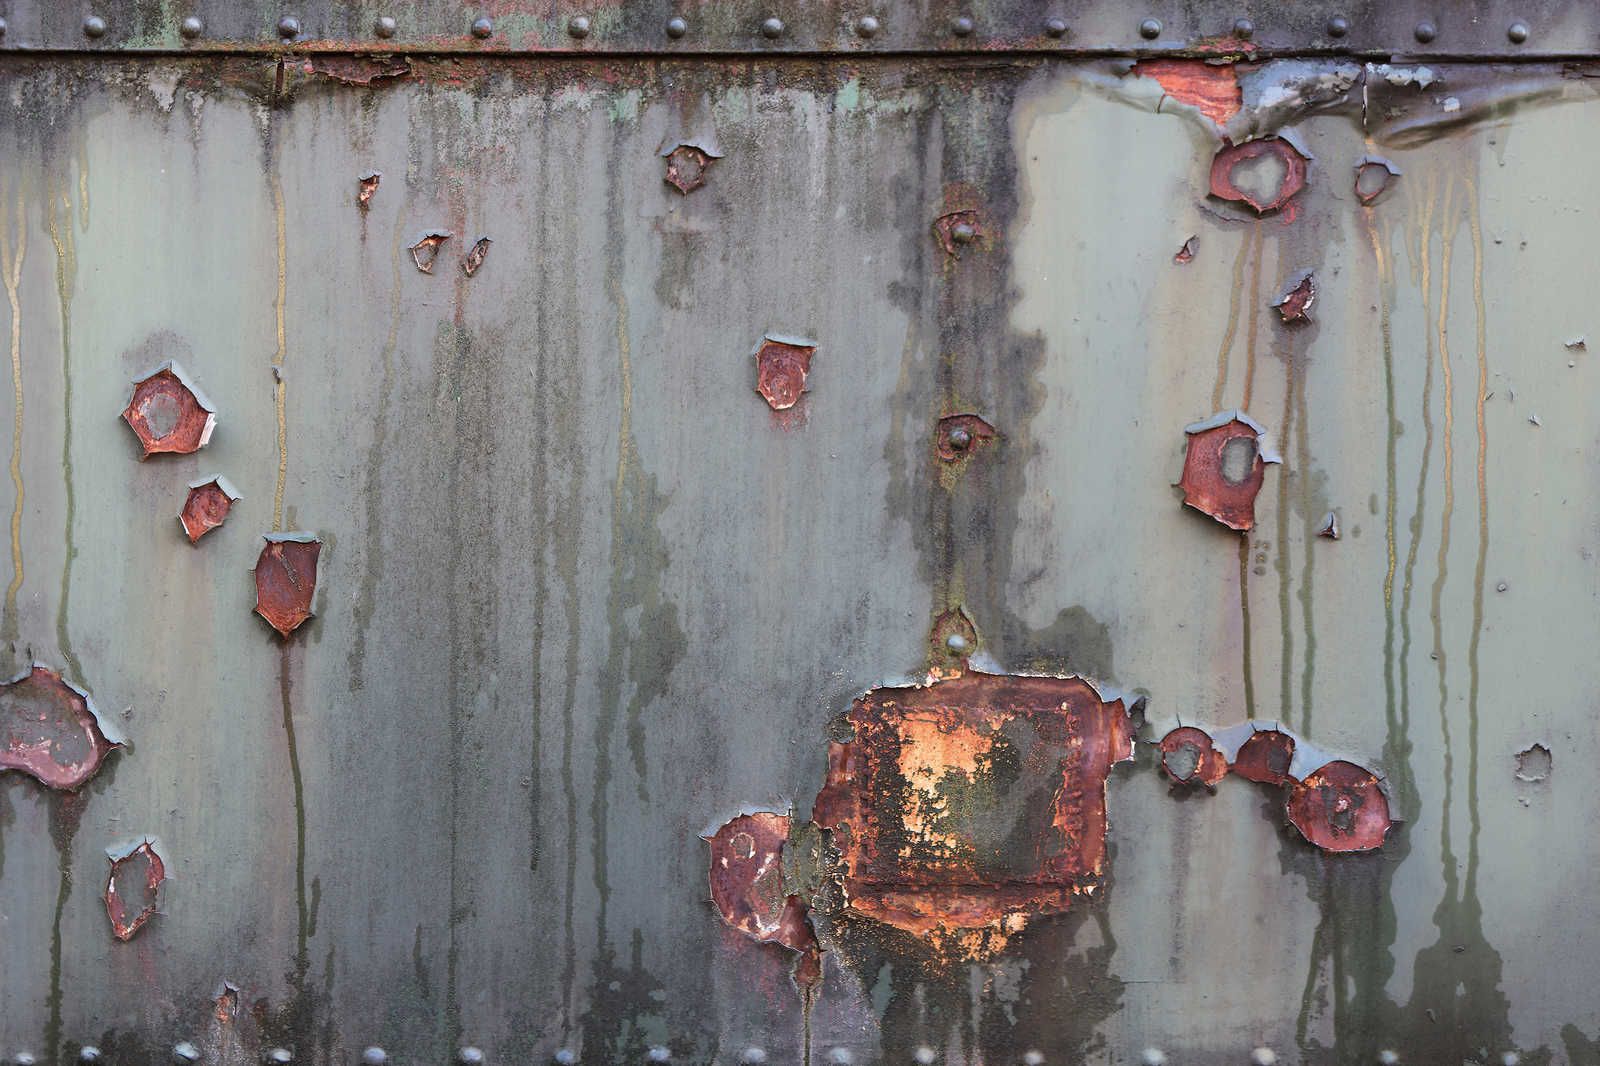             Metallwand - Leinwandbild Industrial mit Rost & Used Look – 1,20 m x 0,80 m
        